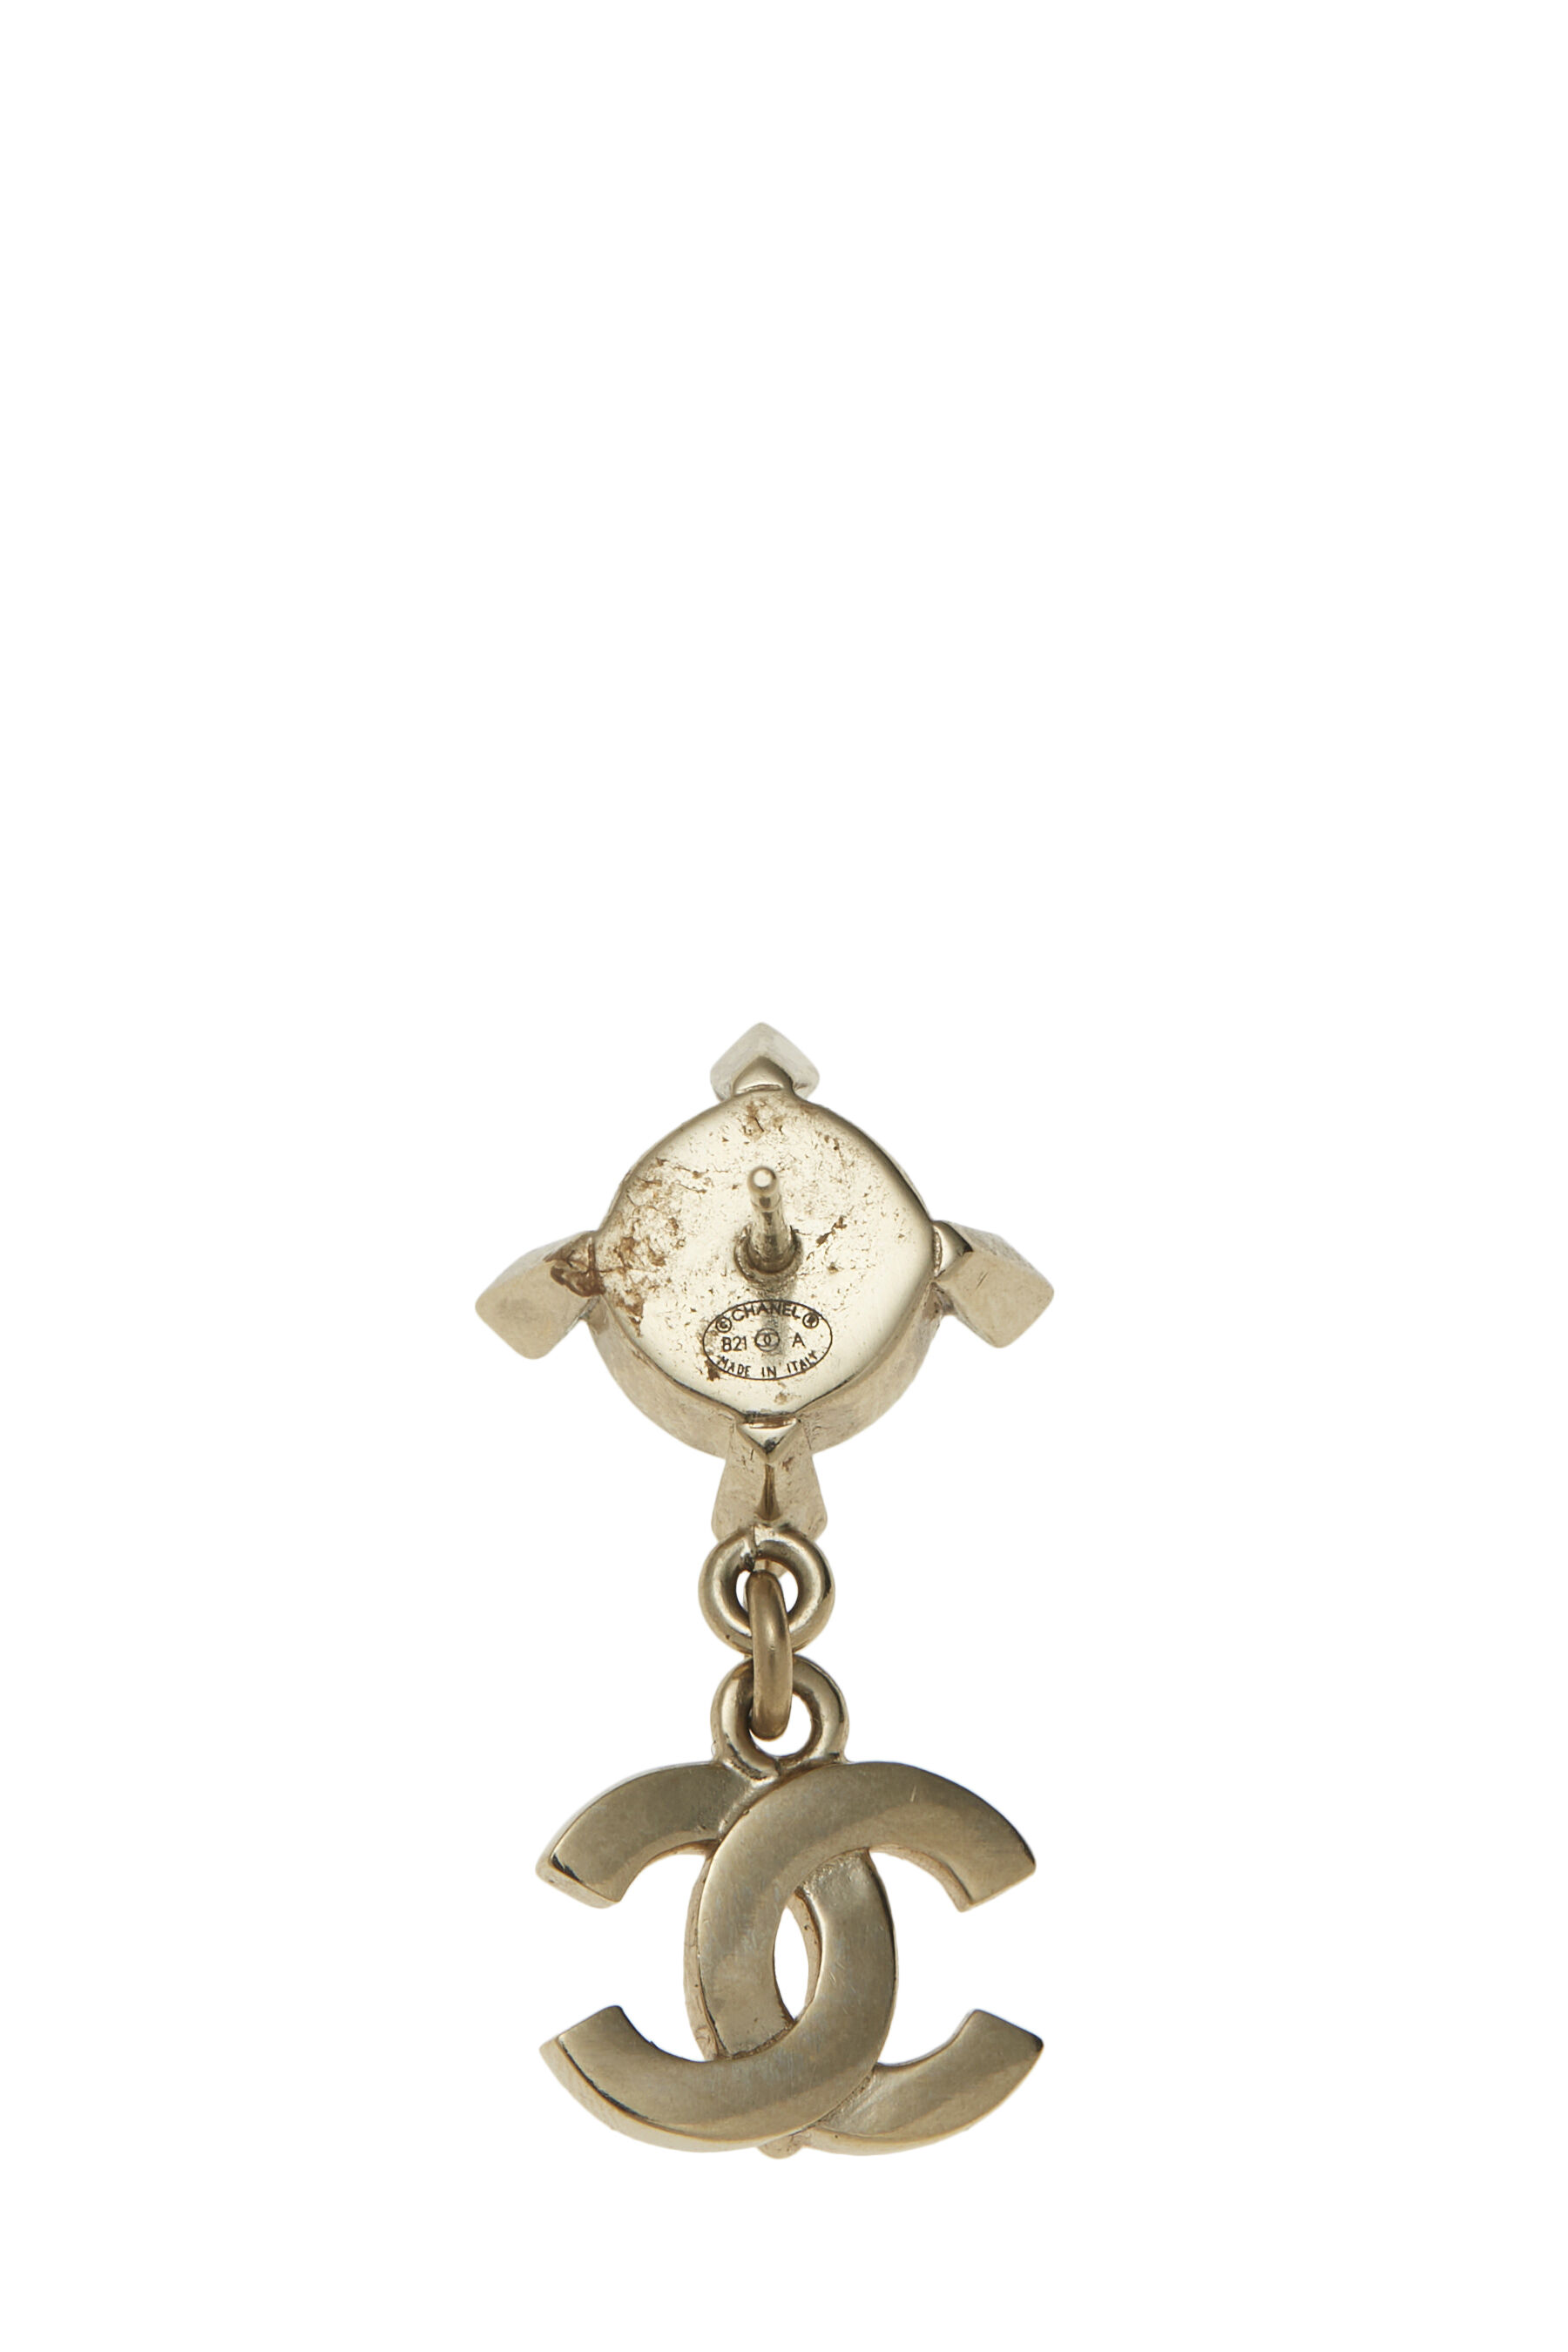 Chanel Gold & Faux Pearl Crystal 'CC' Dangle Earrings